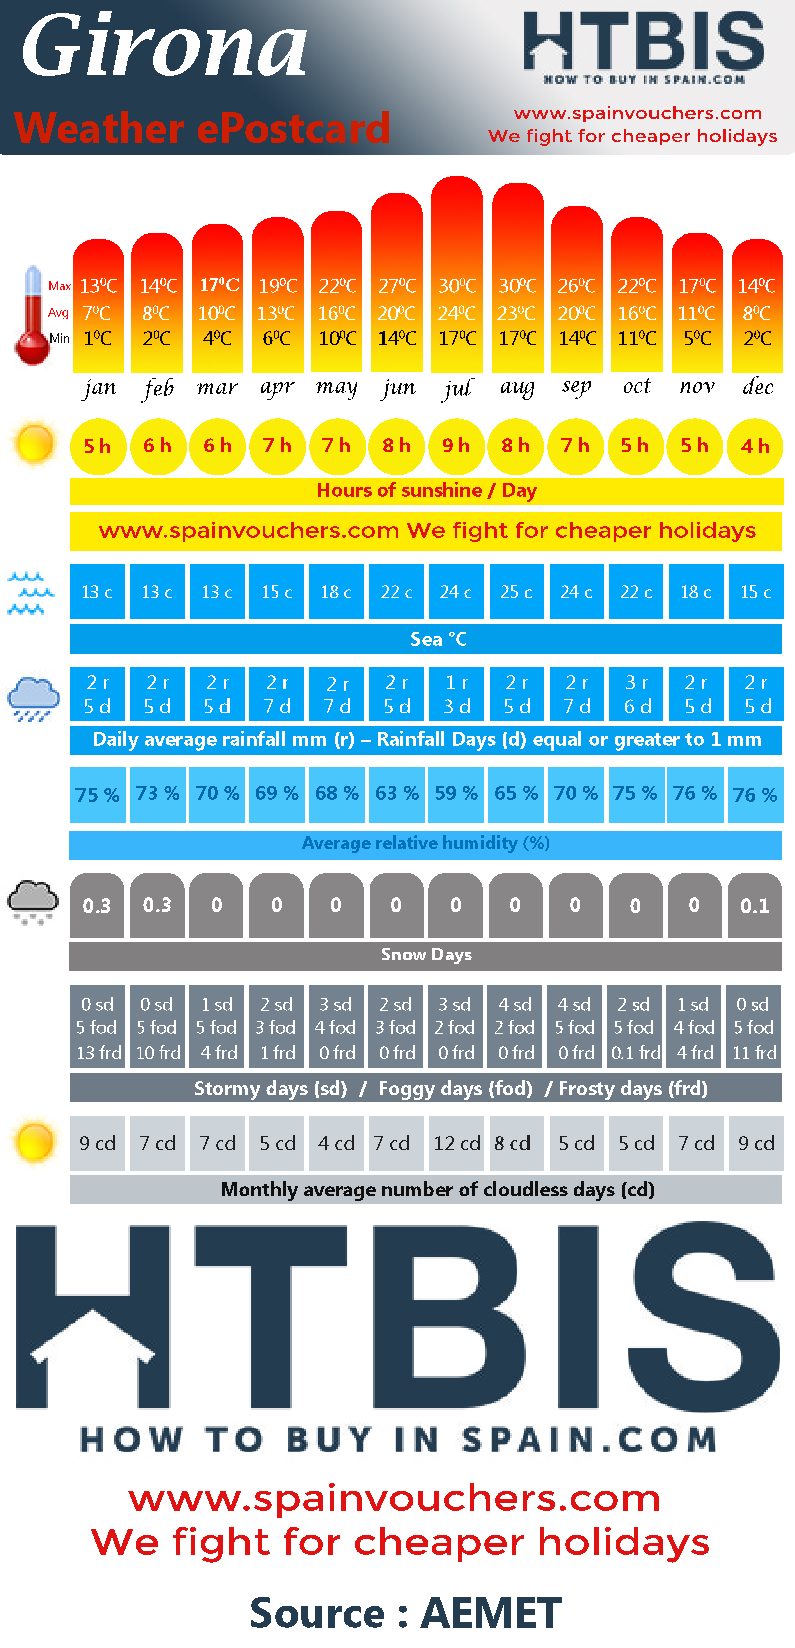 Girona, Weather statistic Infographic